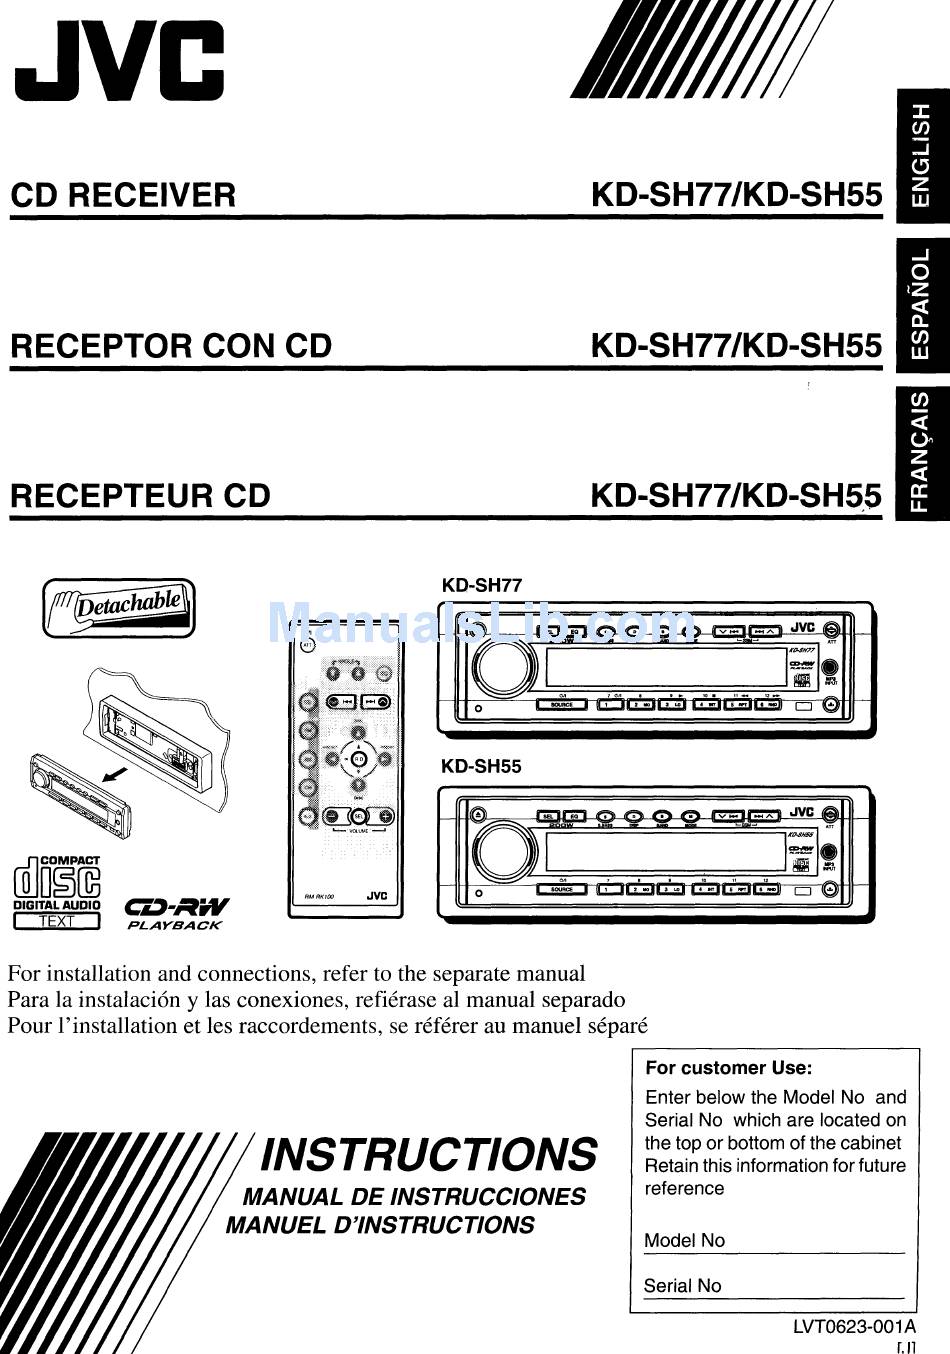 JVC KD-SH77 INSTRUCTIONS MANUAL Pdf Download | ManualsLib